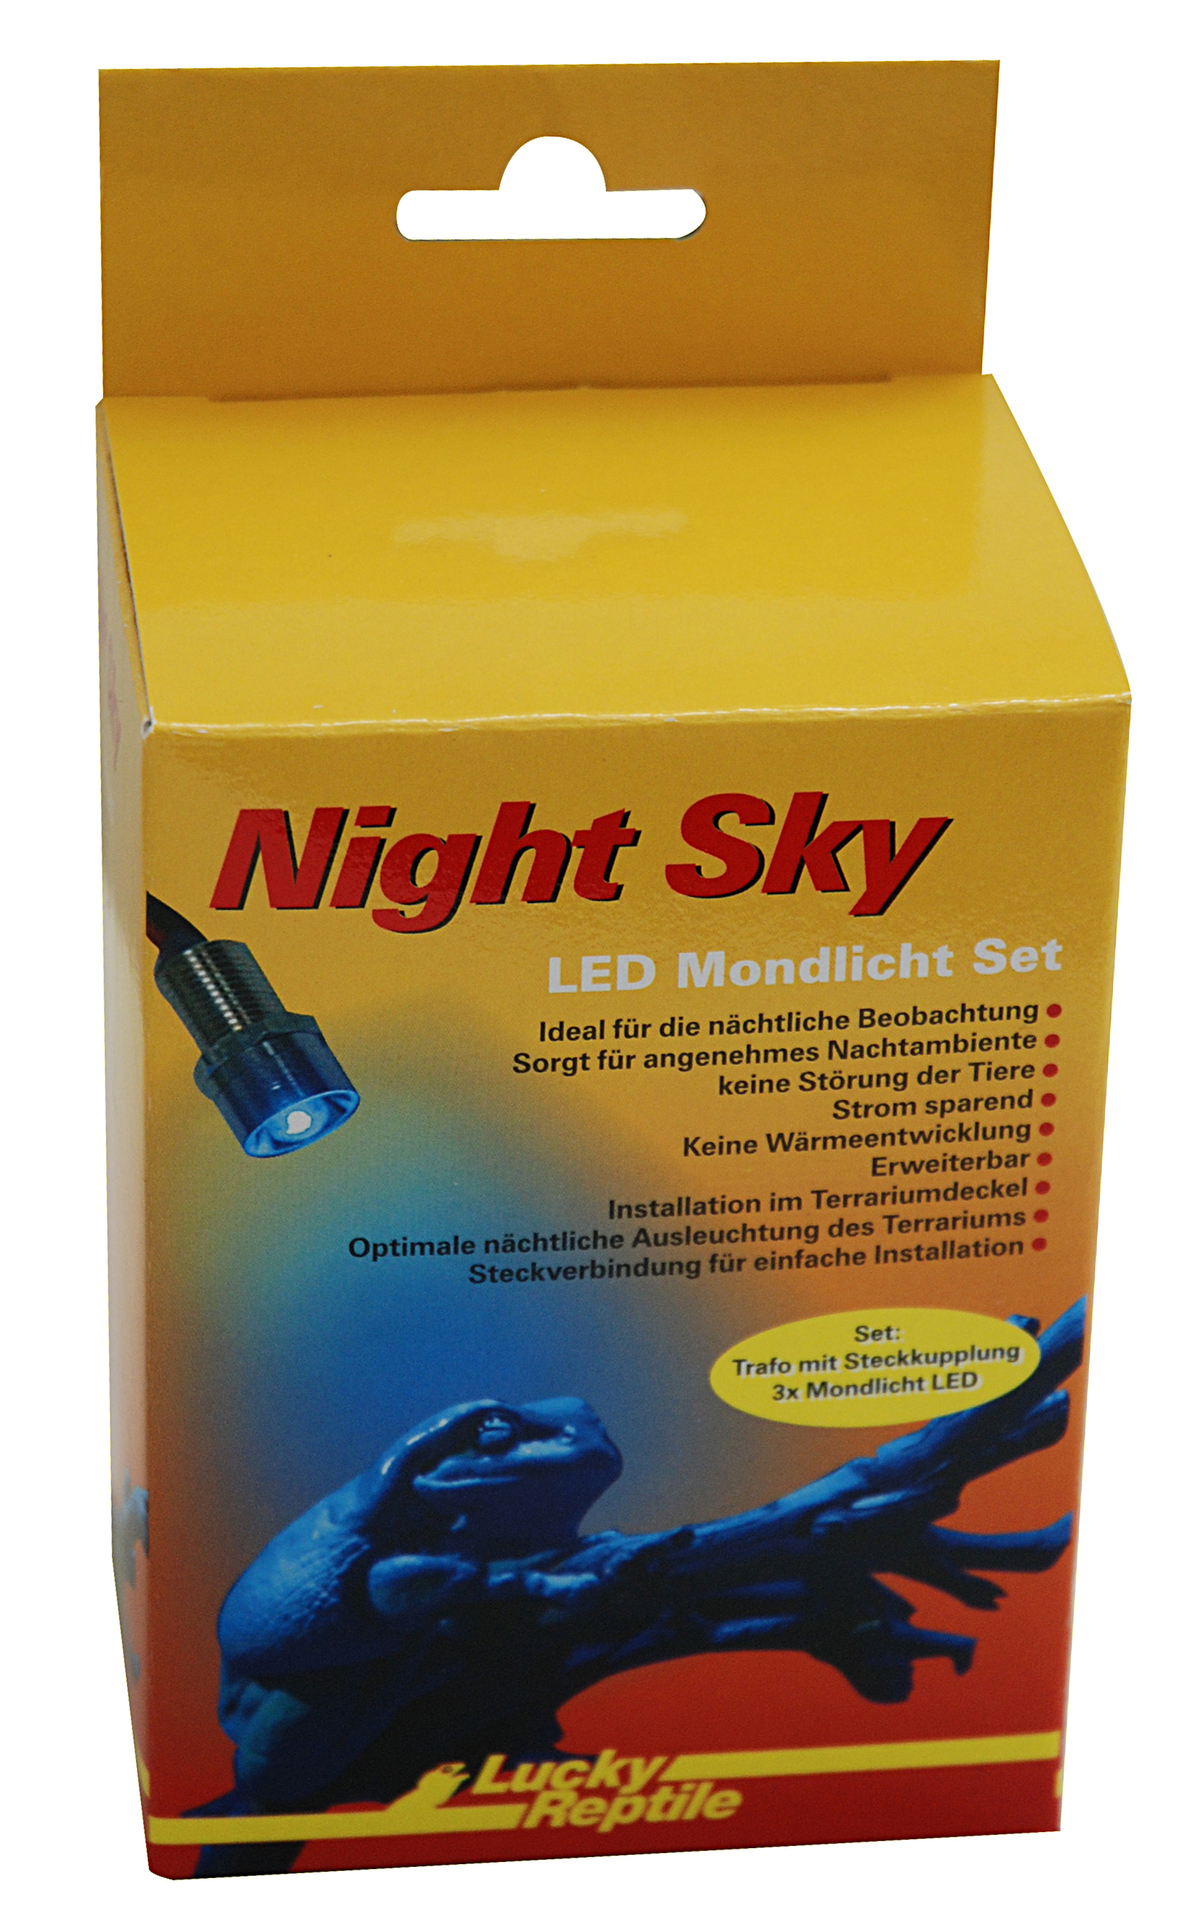 Import-Export Peter Hoch GmbH Night Sky LED – Mondlichtset